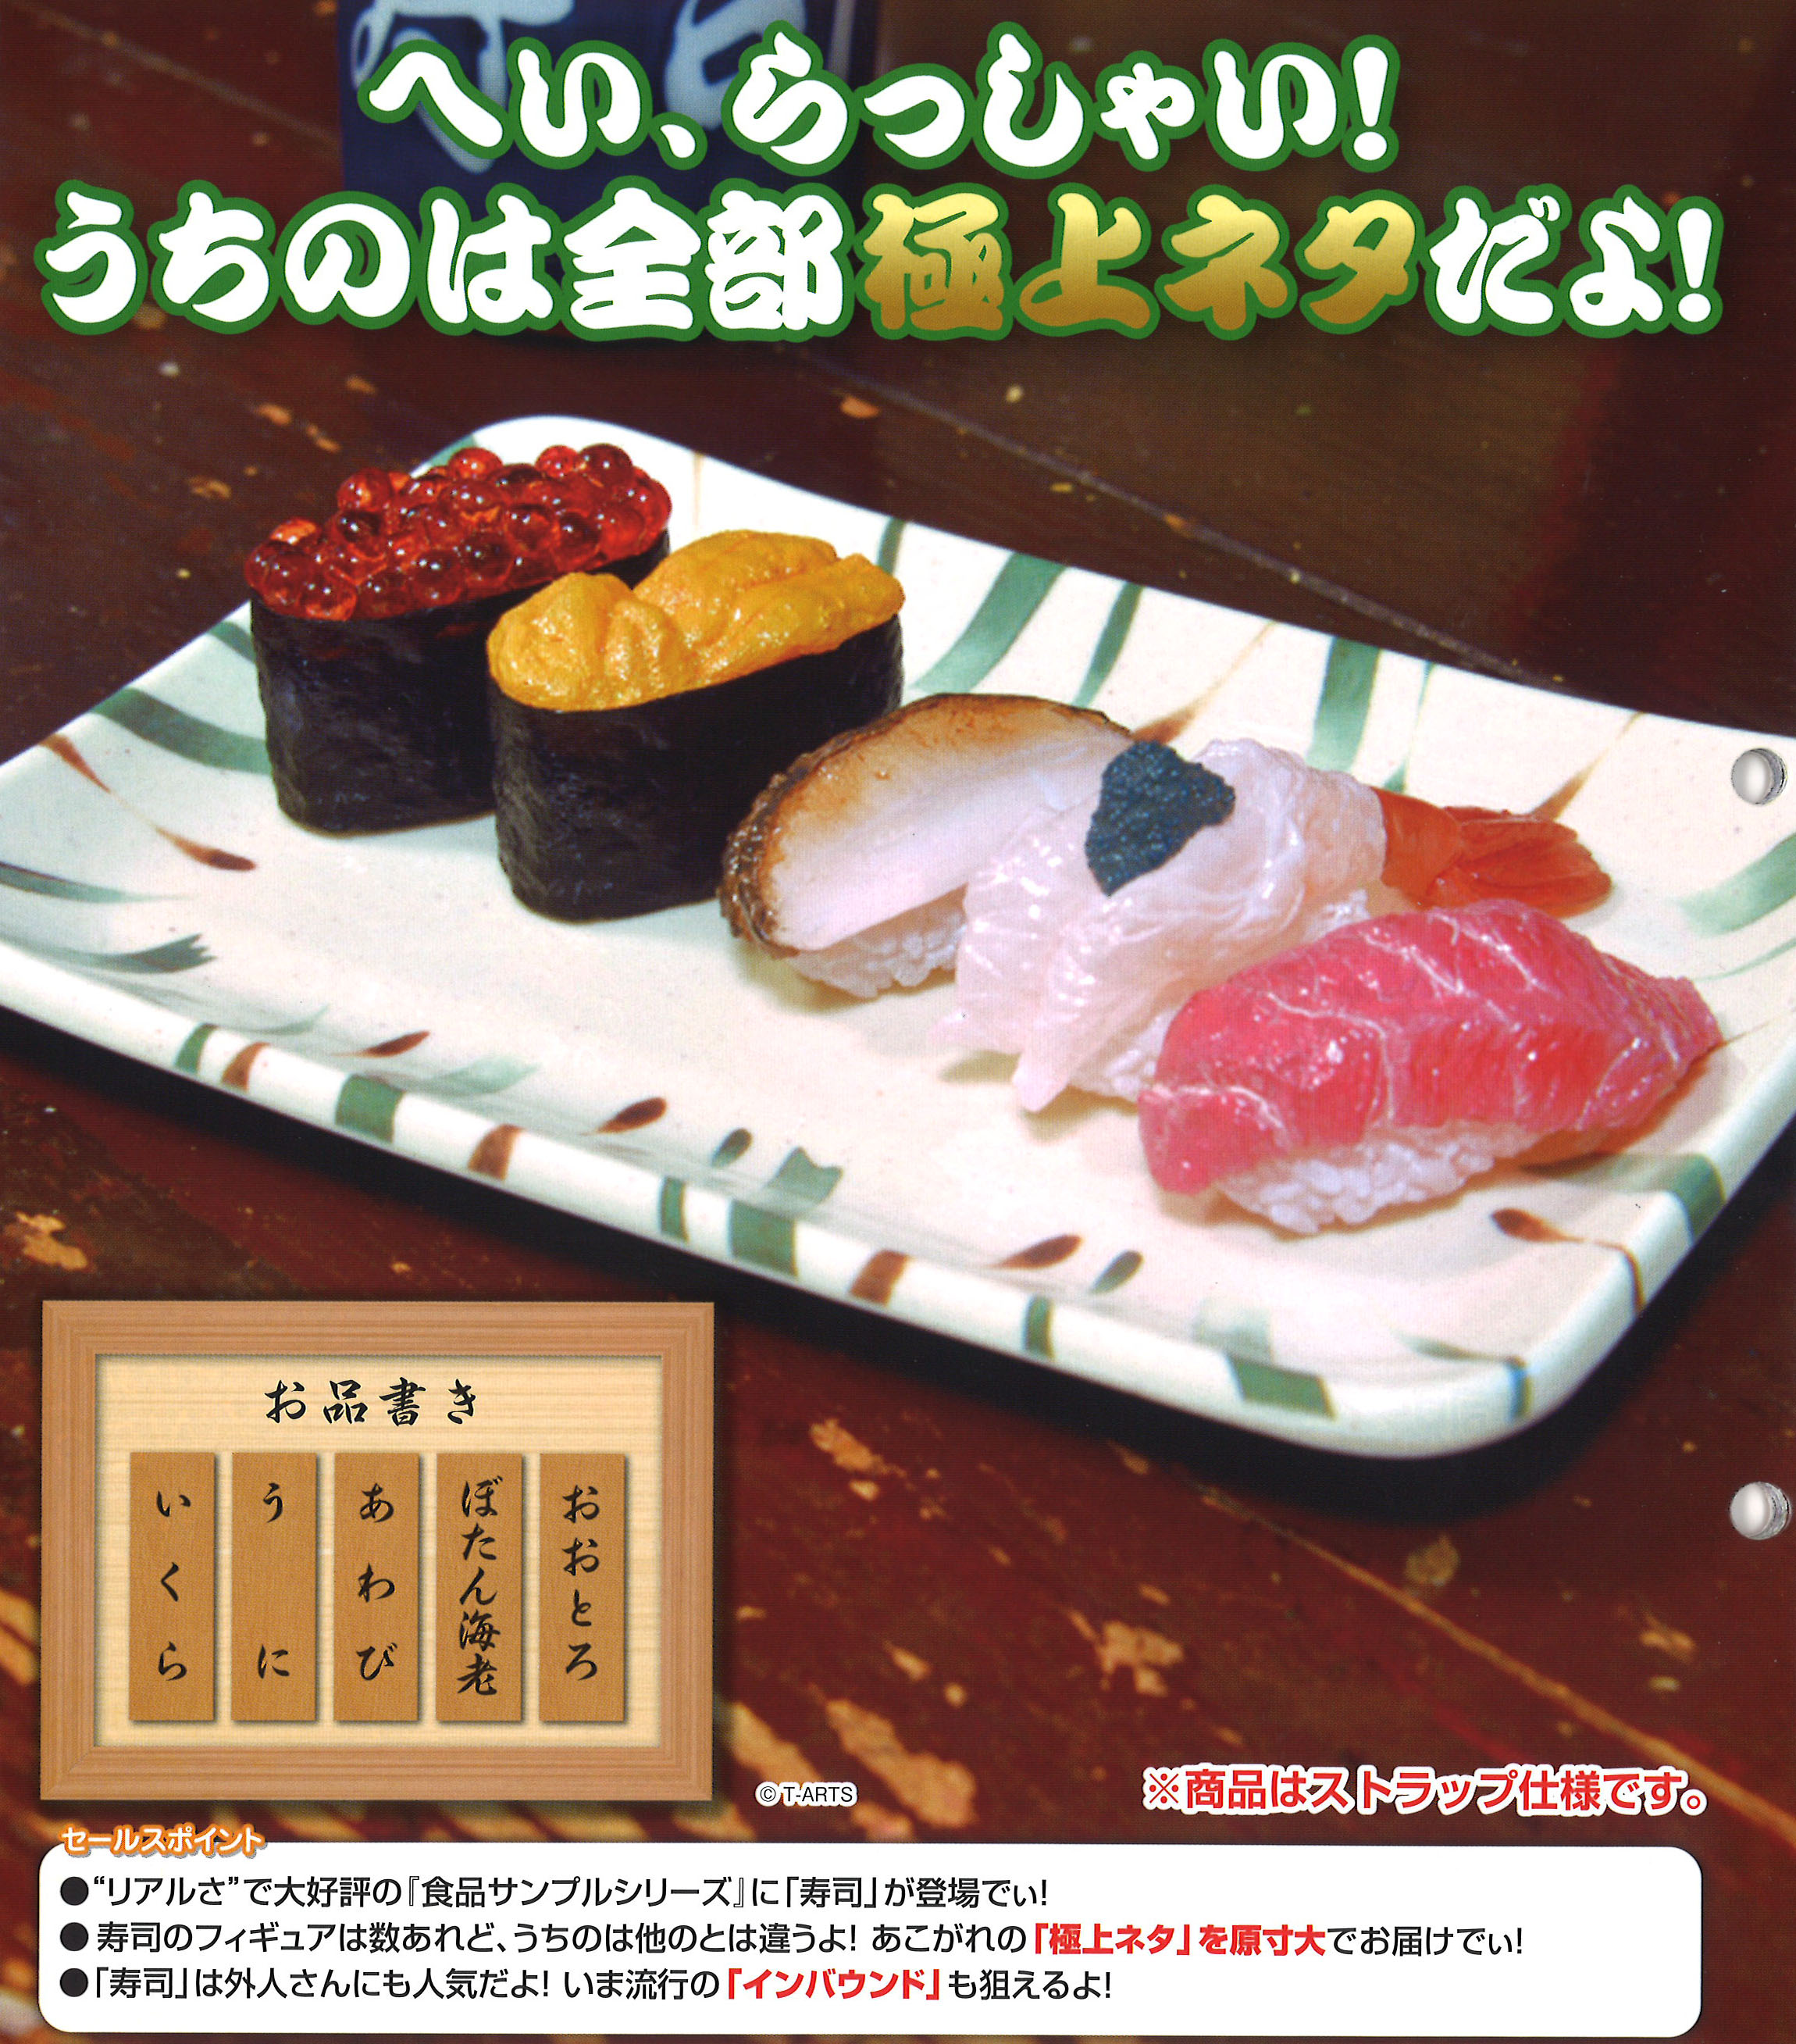 200日元扭蛋 仿真食物 Food Collection 寿司篇 全5种 855238